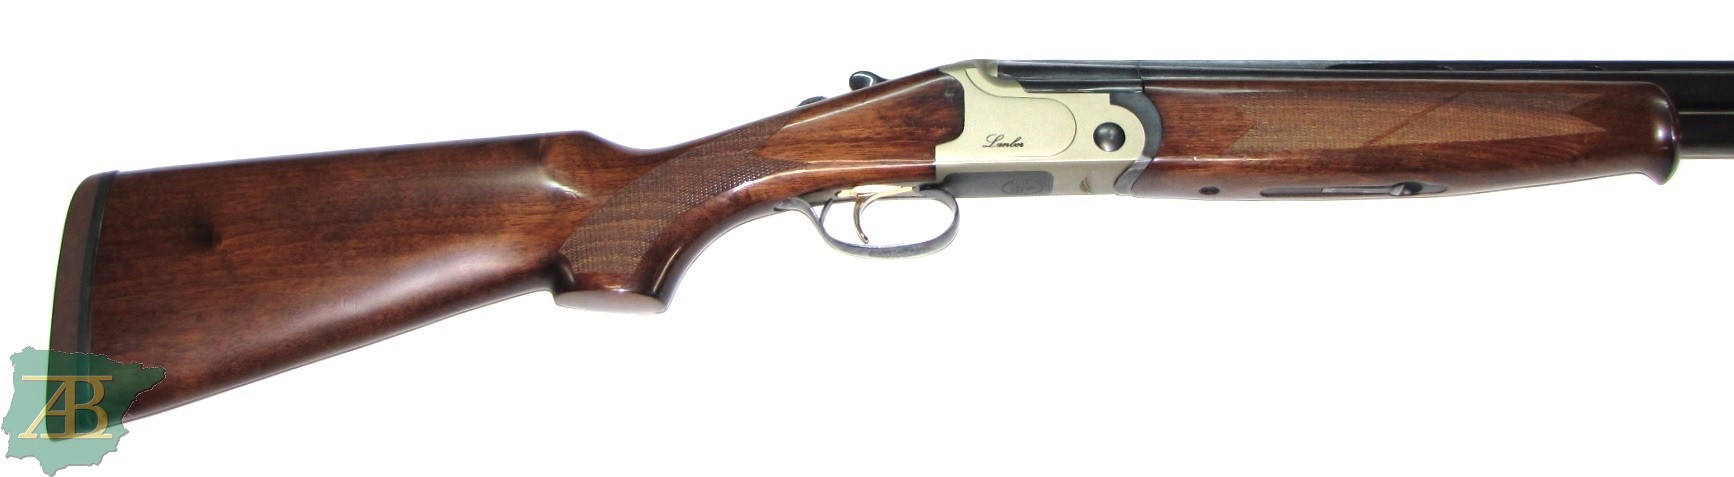 Escopeta superpuesta de caza LANBER Ref 6875-armeriaiberica-2